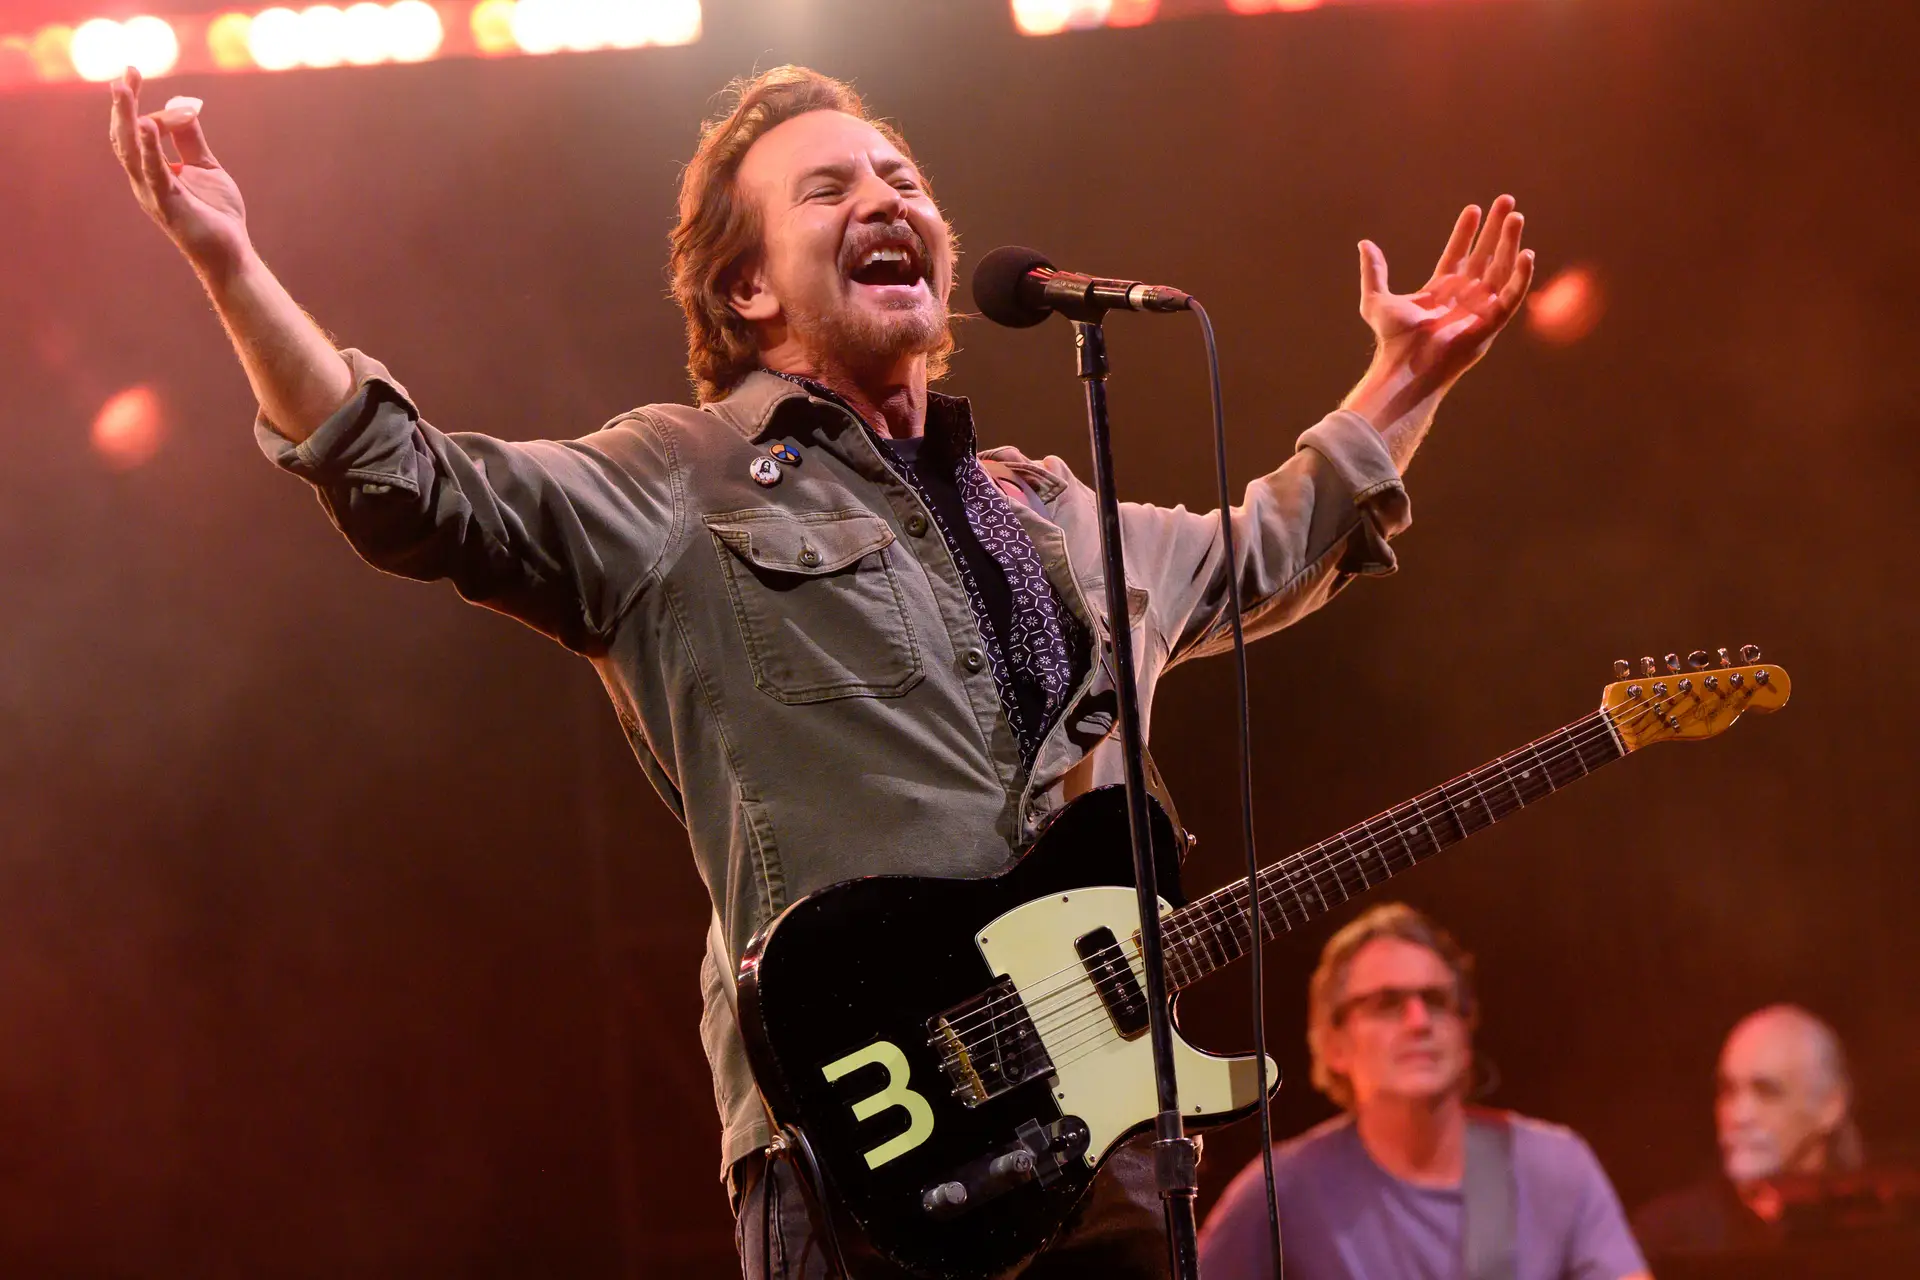 Festival de Eddie Vedder com Foo Fighters, The Killers... e Eddie Vedder, claro